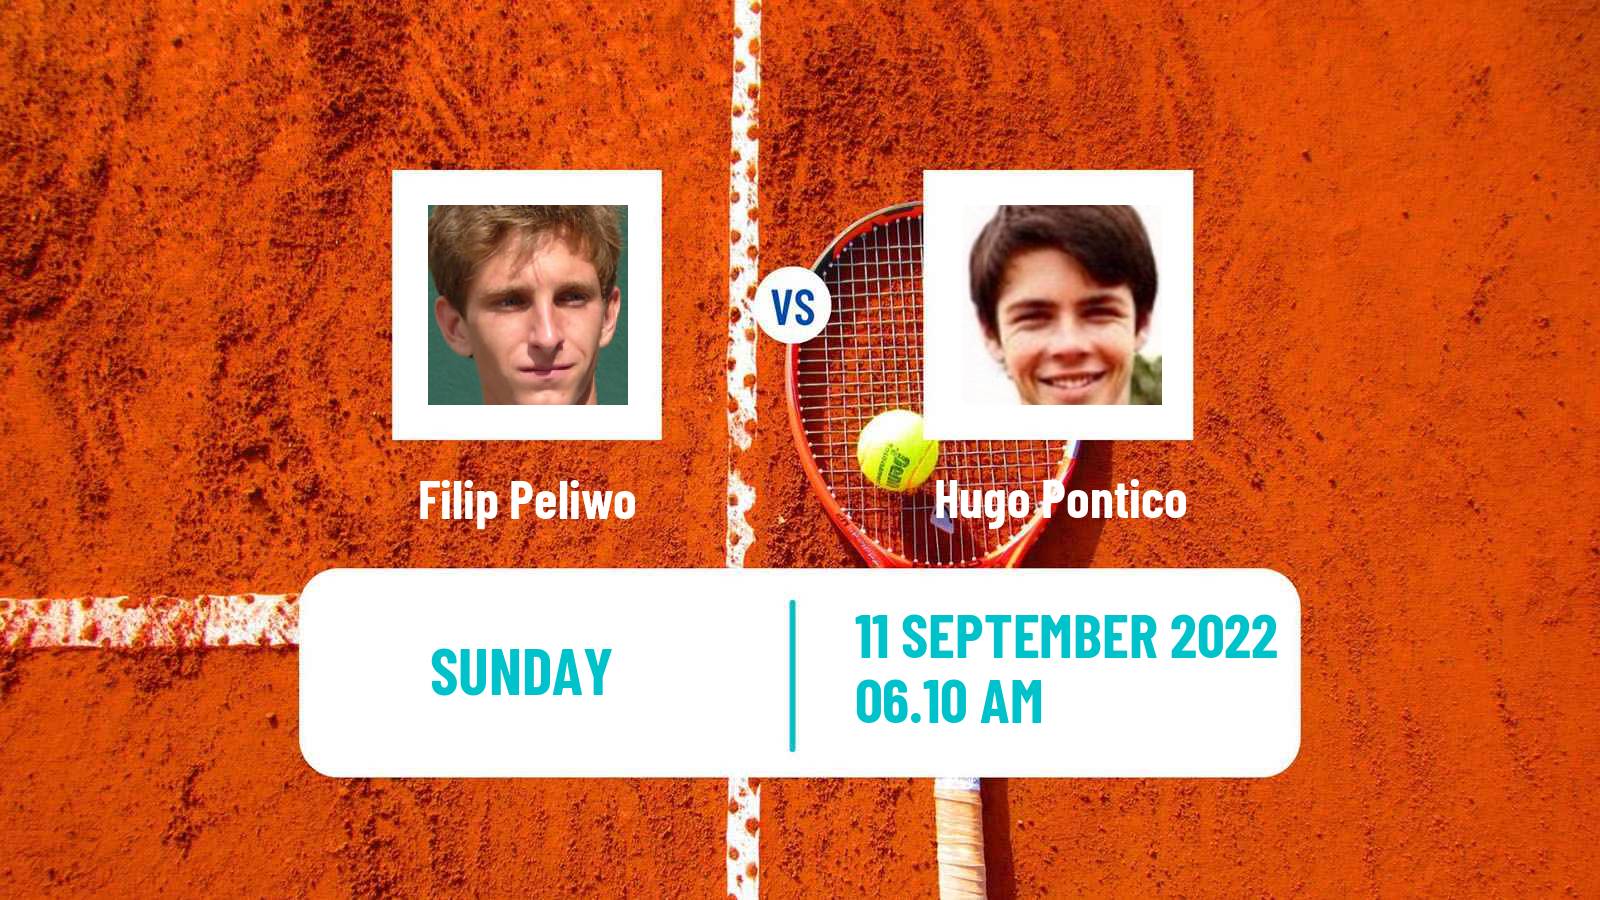 Tennis ATP Challenger Filip Peliwo - Hugo Pontico